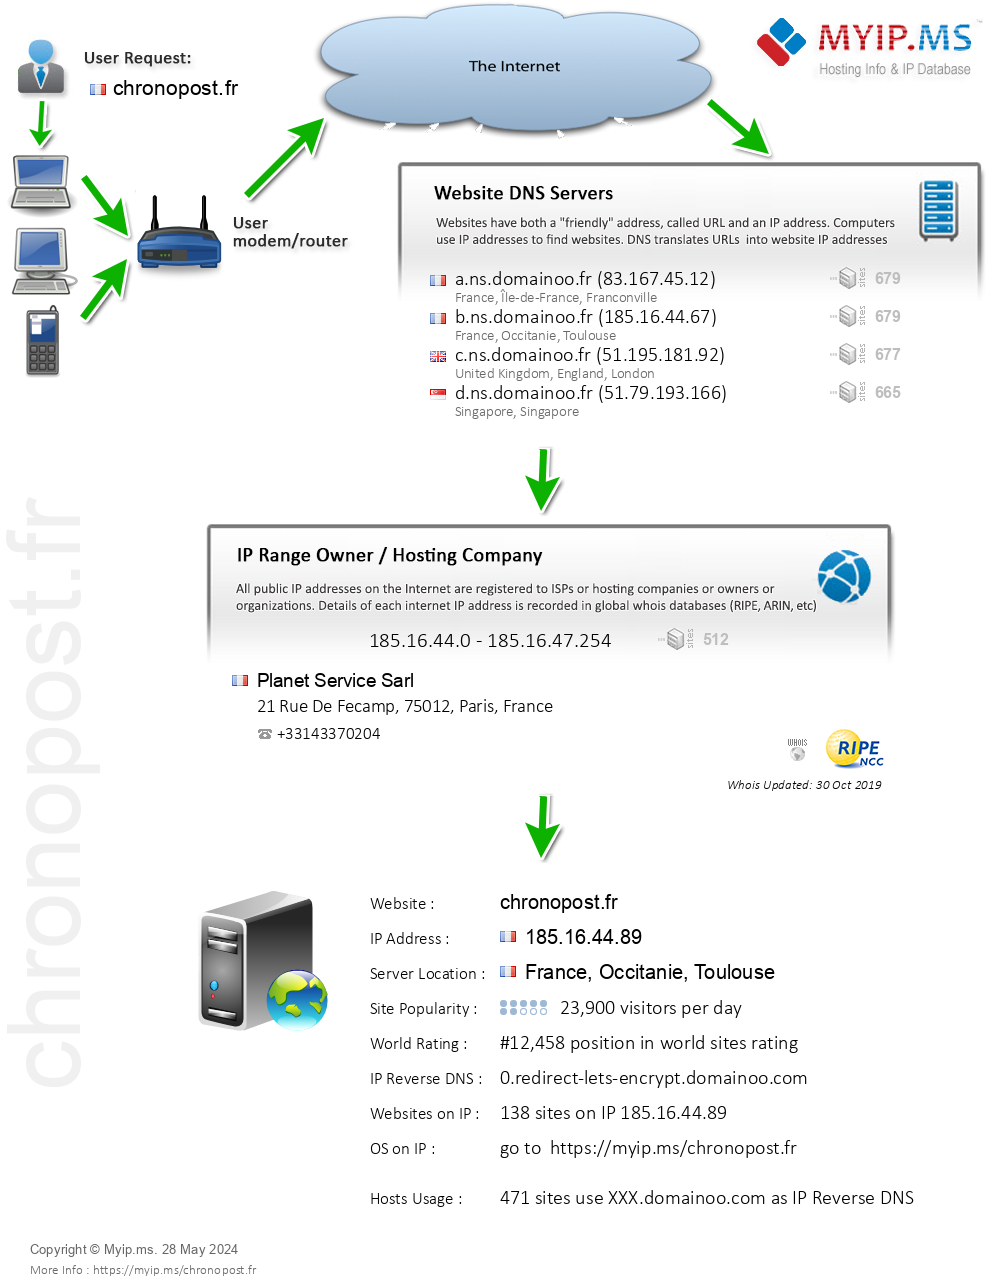 Chronopost.fr - Website Hosting Visual IP Diagram